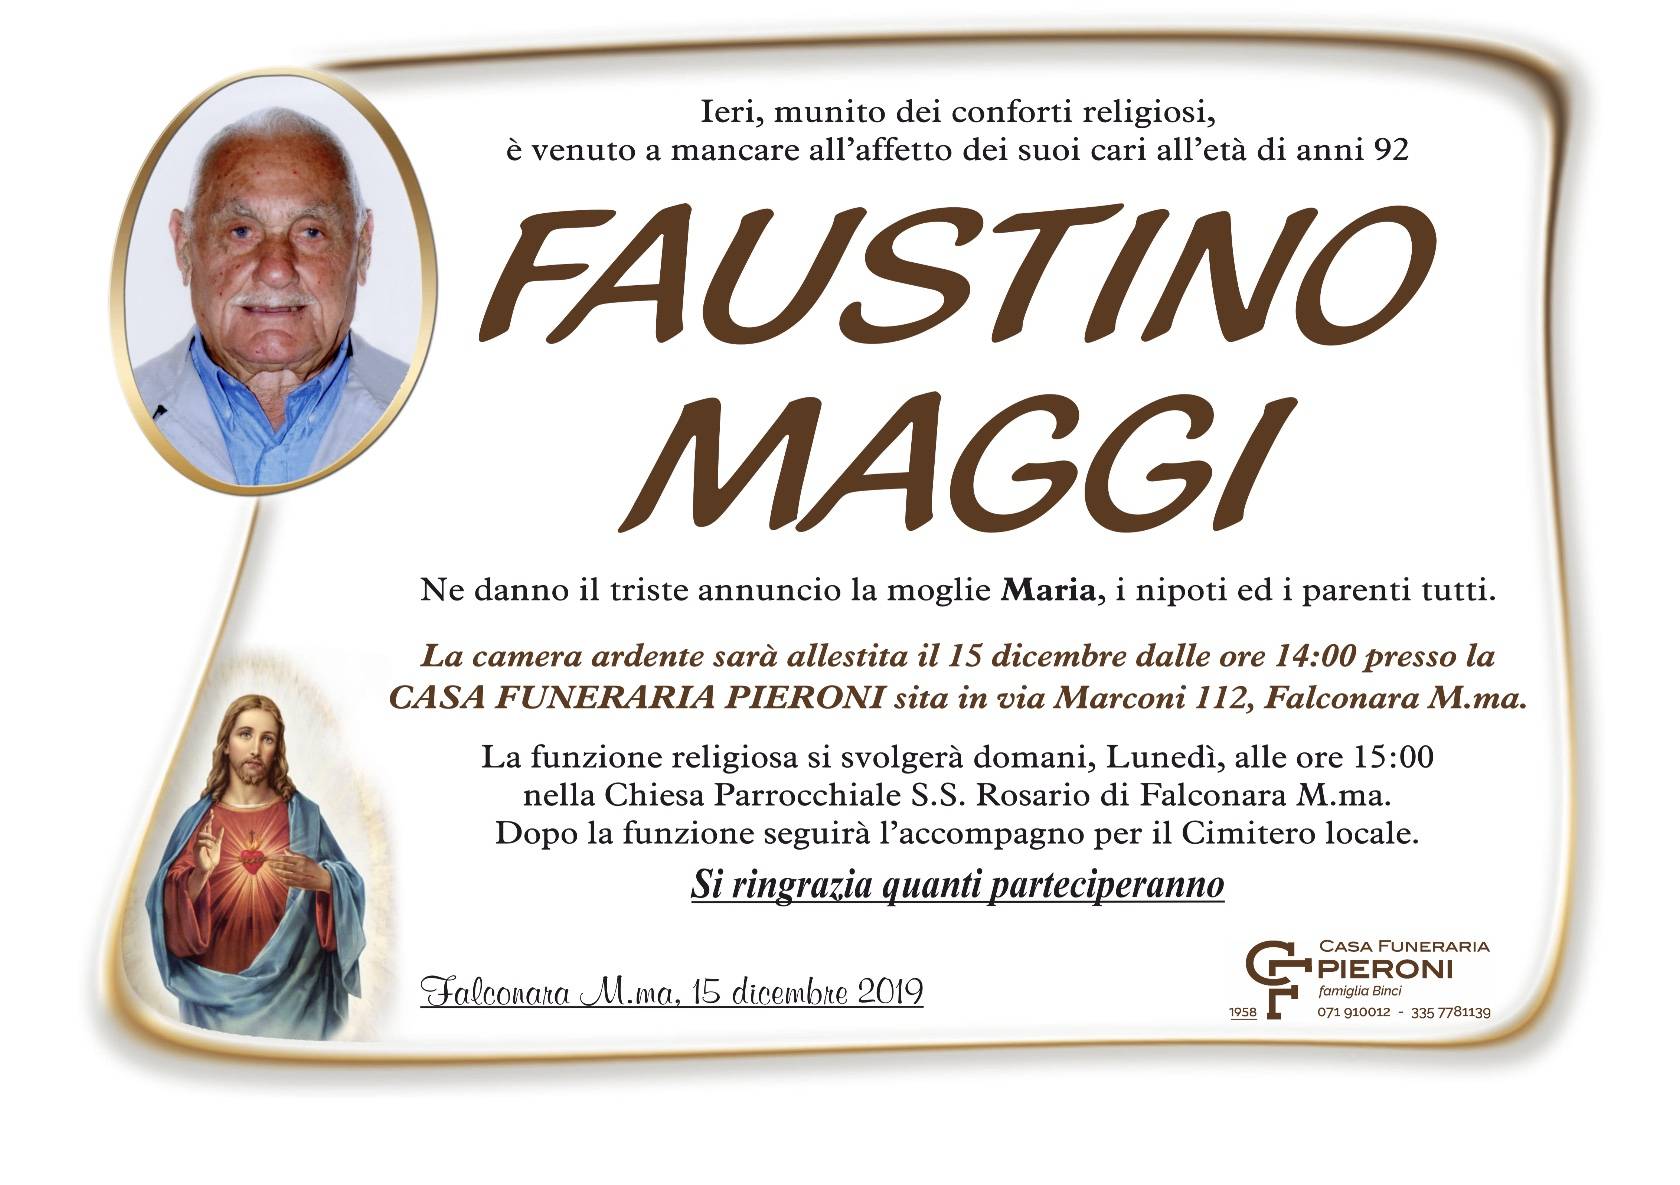 Faustino Maggi